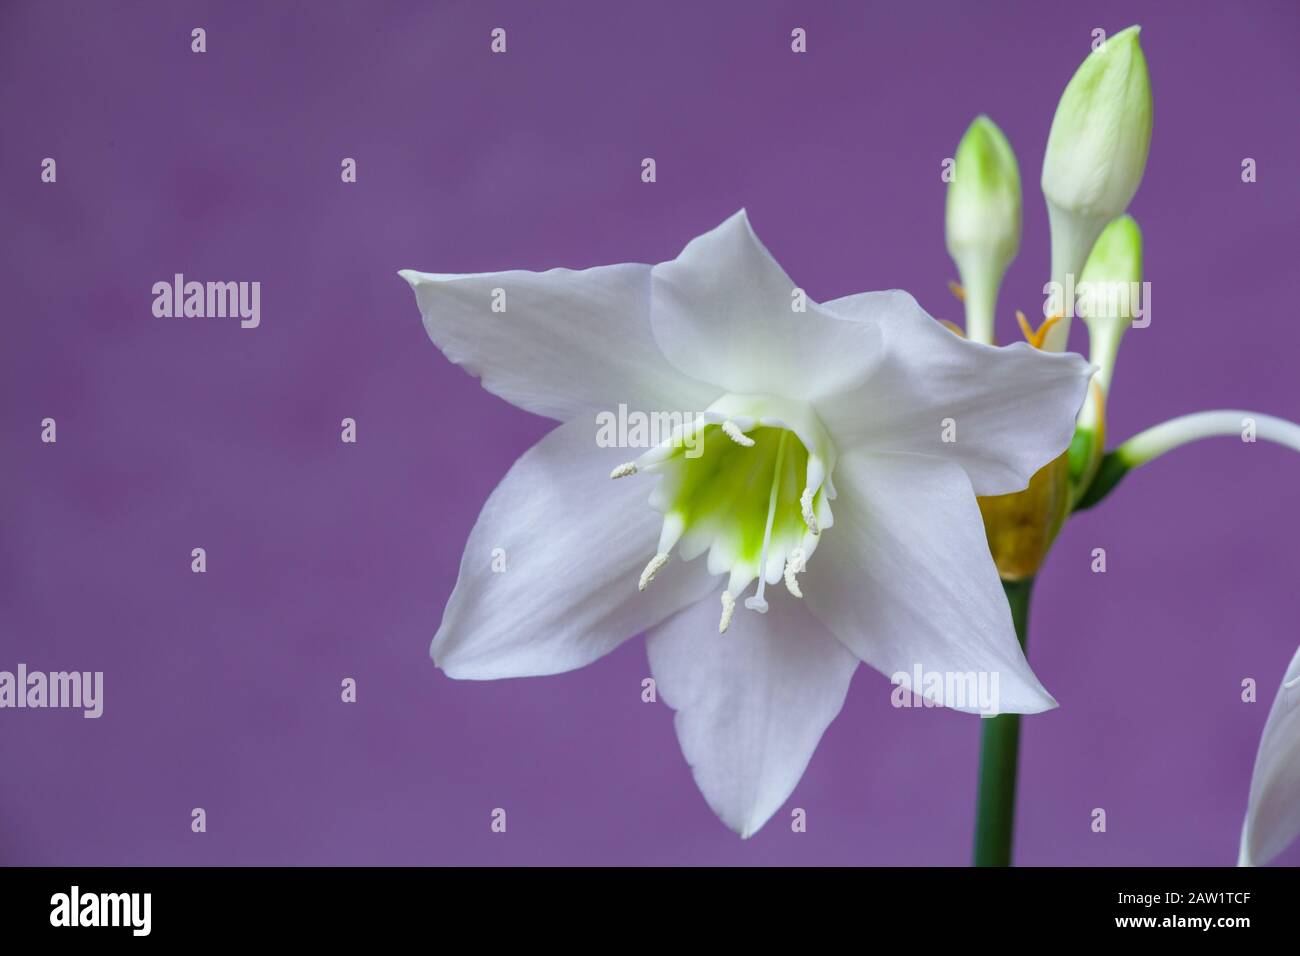 Beautiful Eucharis, the English name Amazon lily, flower close up against purple background Stock Photo